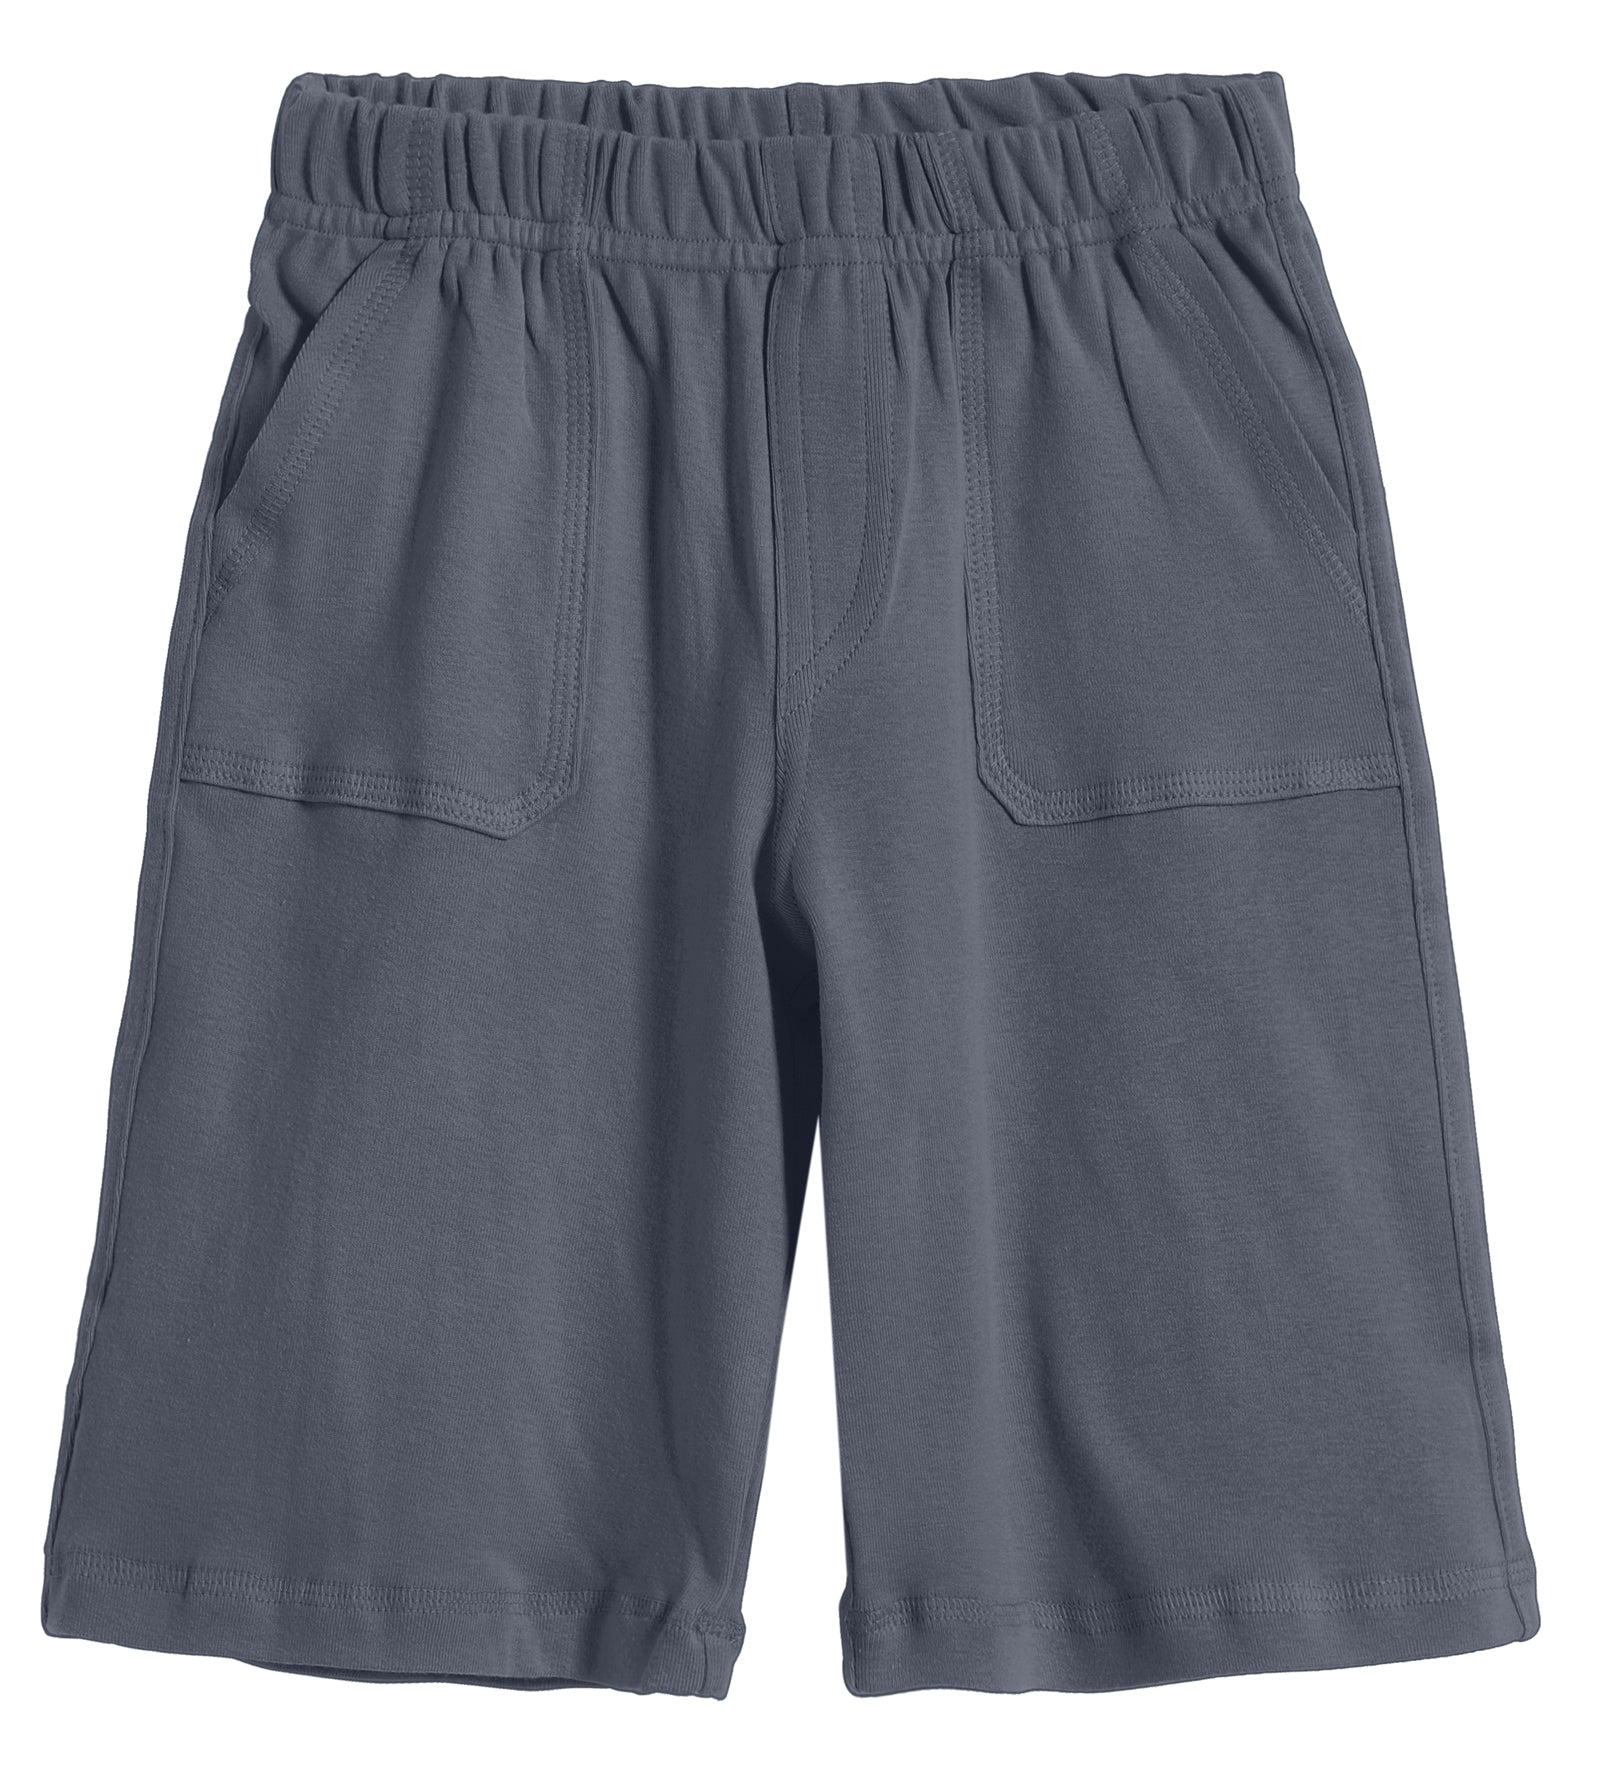 Xxdx 16yy Videos - Soft Cotton UPF 50+ 3-Pocket Jersey Shorts | Concrete Grey - City Threads  USA